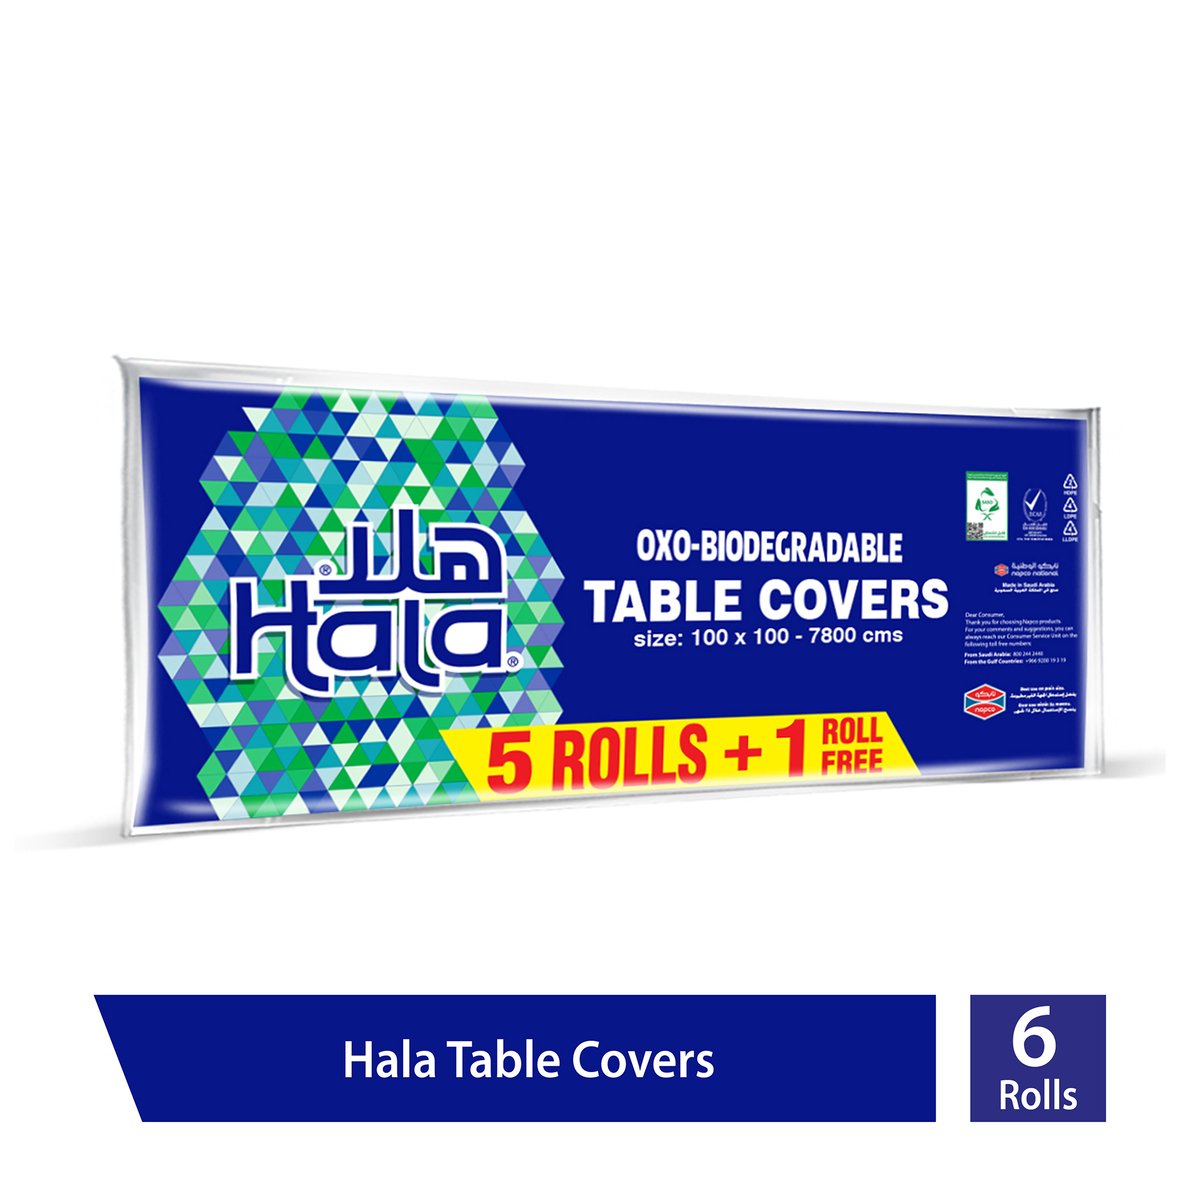 Hala Table Covers Oxo-Biodegradable Size 100 x 100 -7800cms 13pcs 5+1